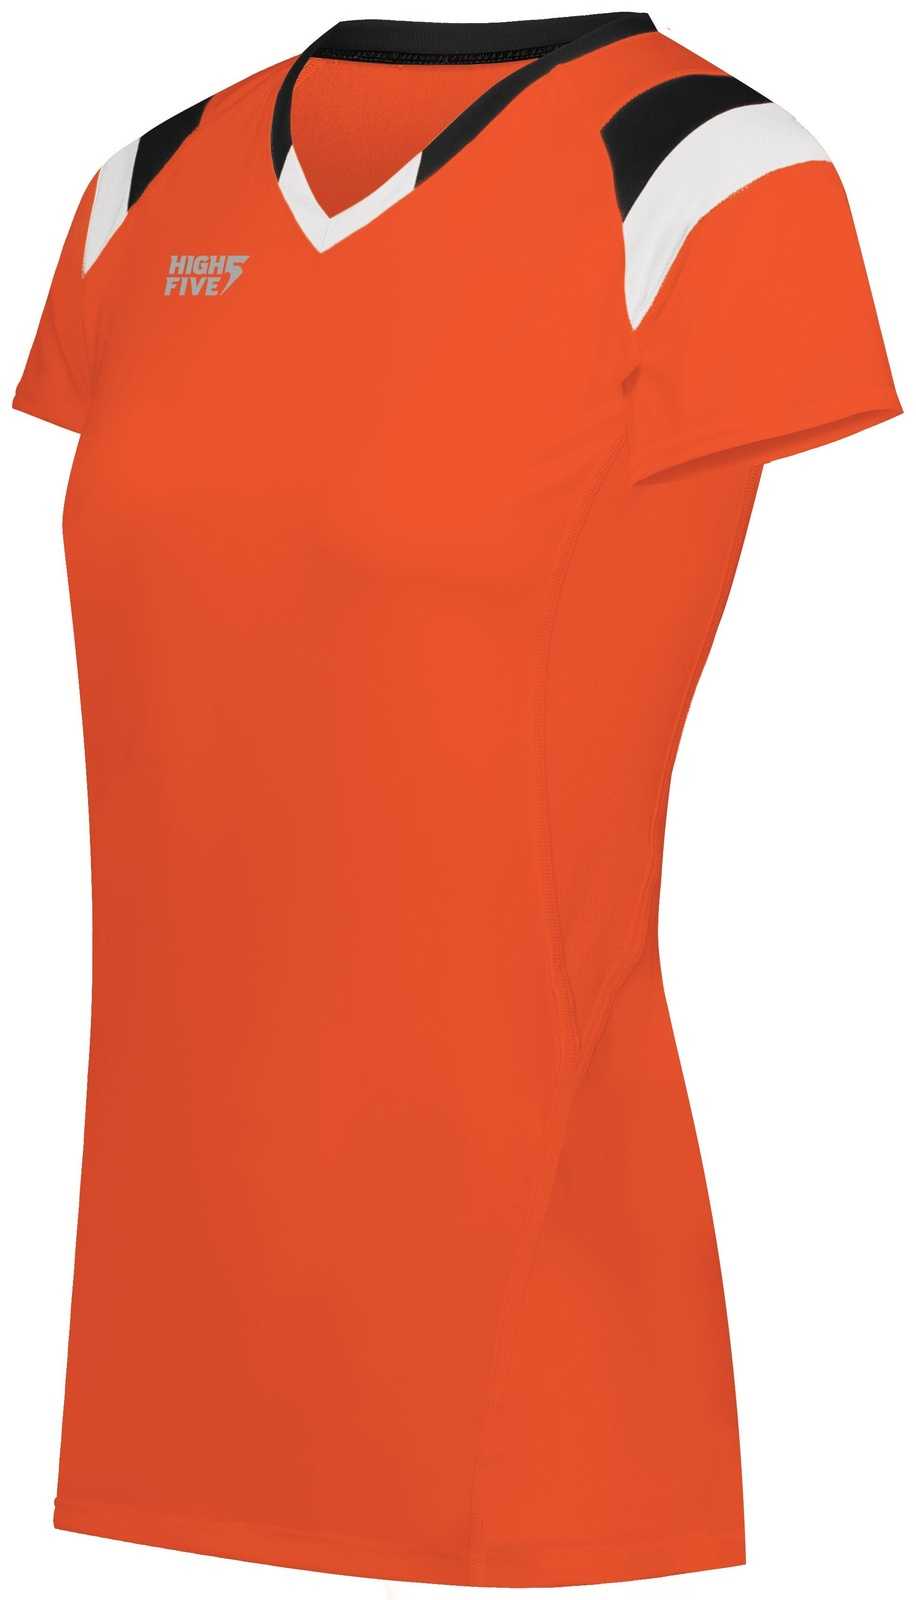 High Five 342253 Girls TruHit Tri Short Sleeve Jersey - Orange Black White - HIT a Double